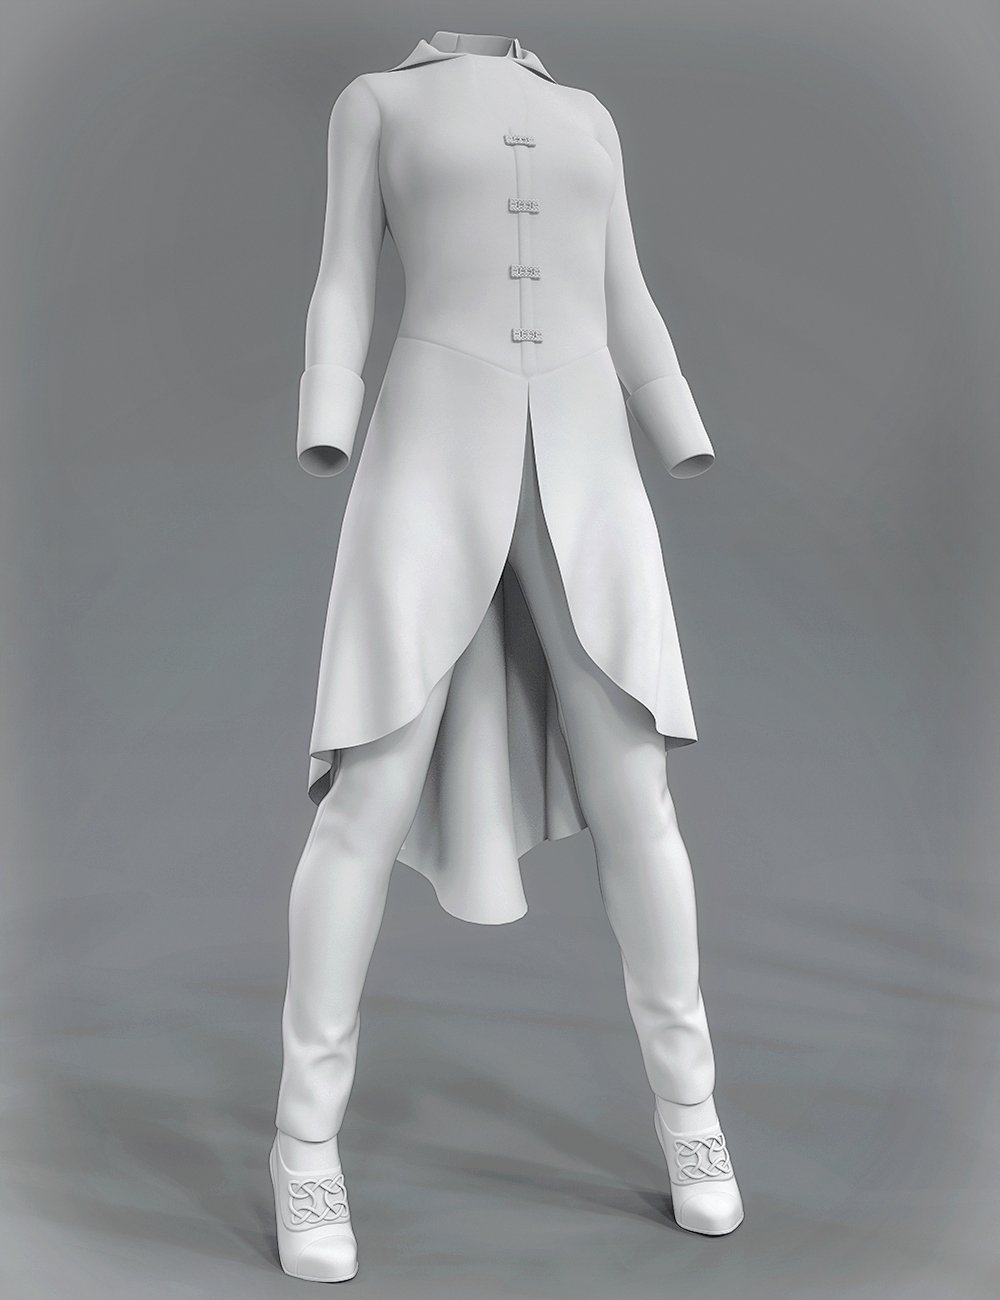 dForce Cerian Nobility Outfit for Genesis 8 Female(s) by: Moonscape GraphicsNikisatezSade, 3D Models by Daz 3D